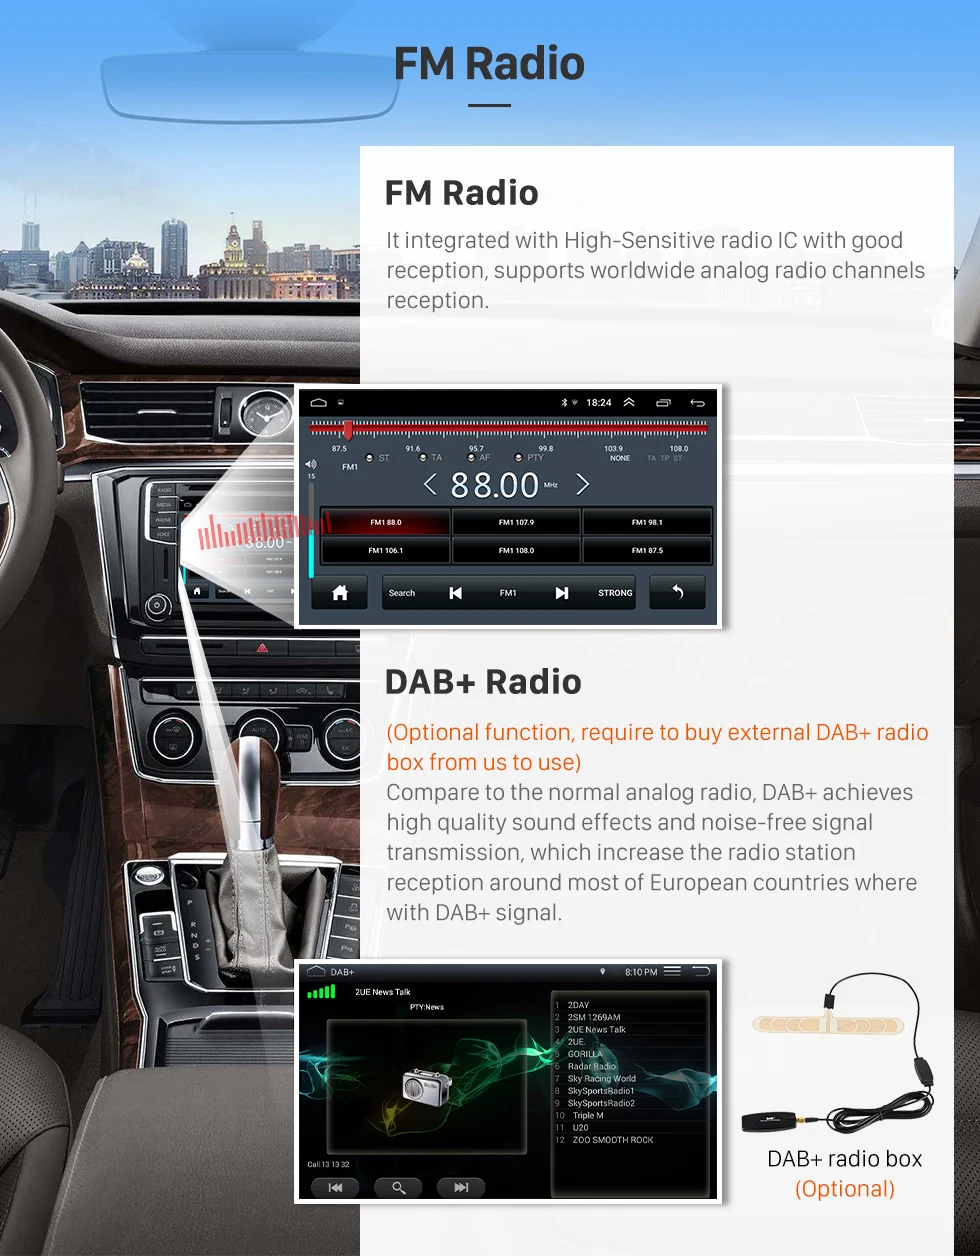 Harfey 2din 9 дюймов Android 8.1GPS навигации автомобиля радио для Audi A6 S6 RS6 1997-2004 WI-FI HD сенсорный AUX USB поддержка Carplay